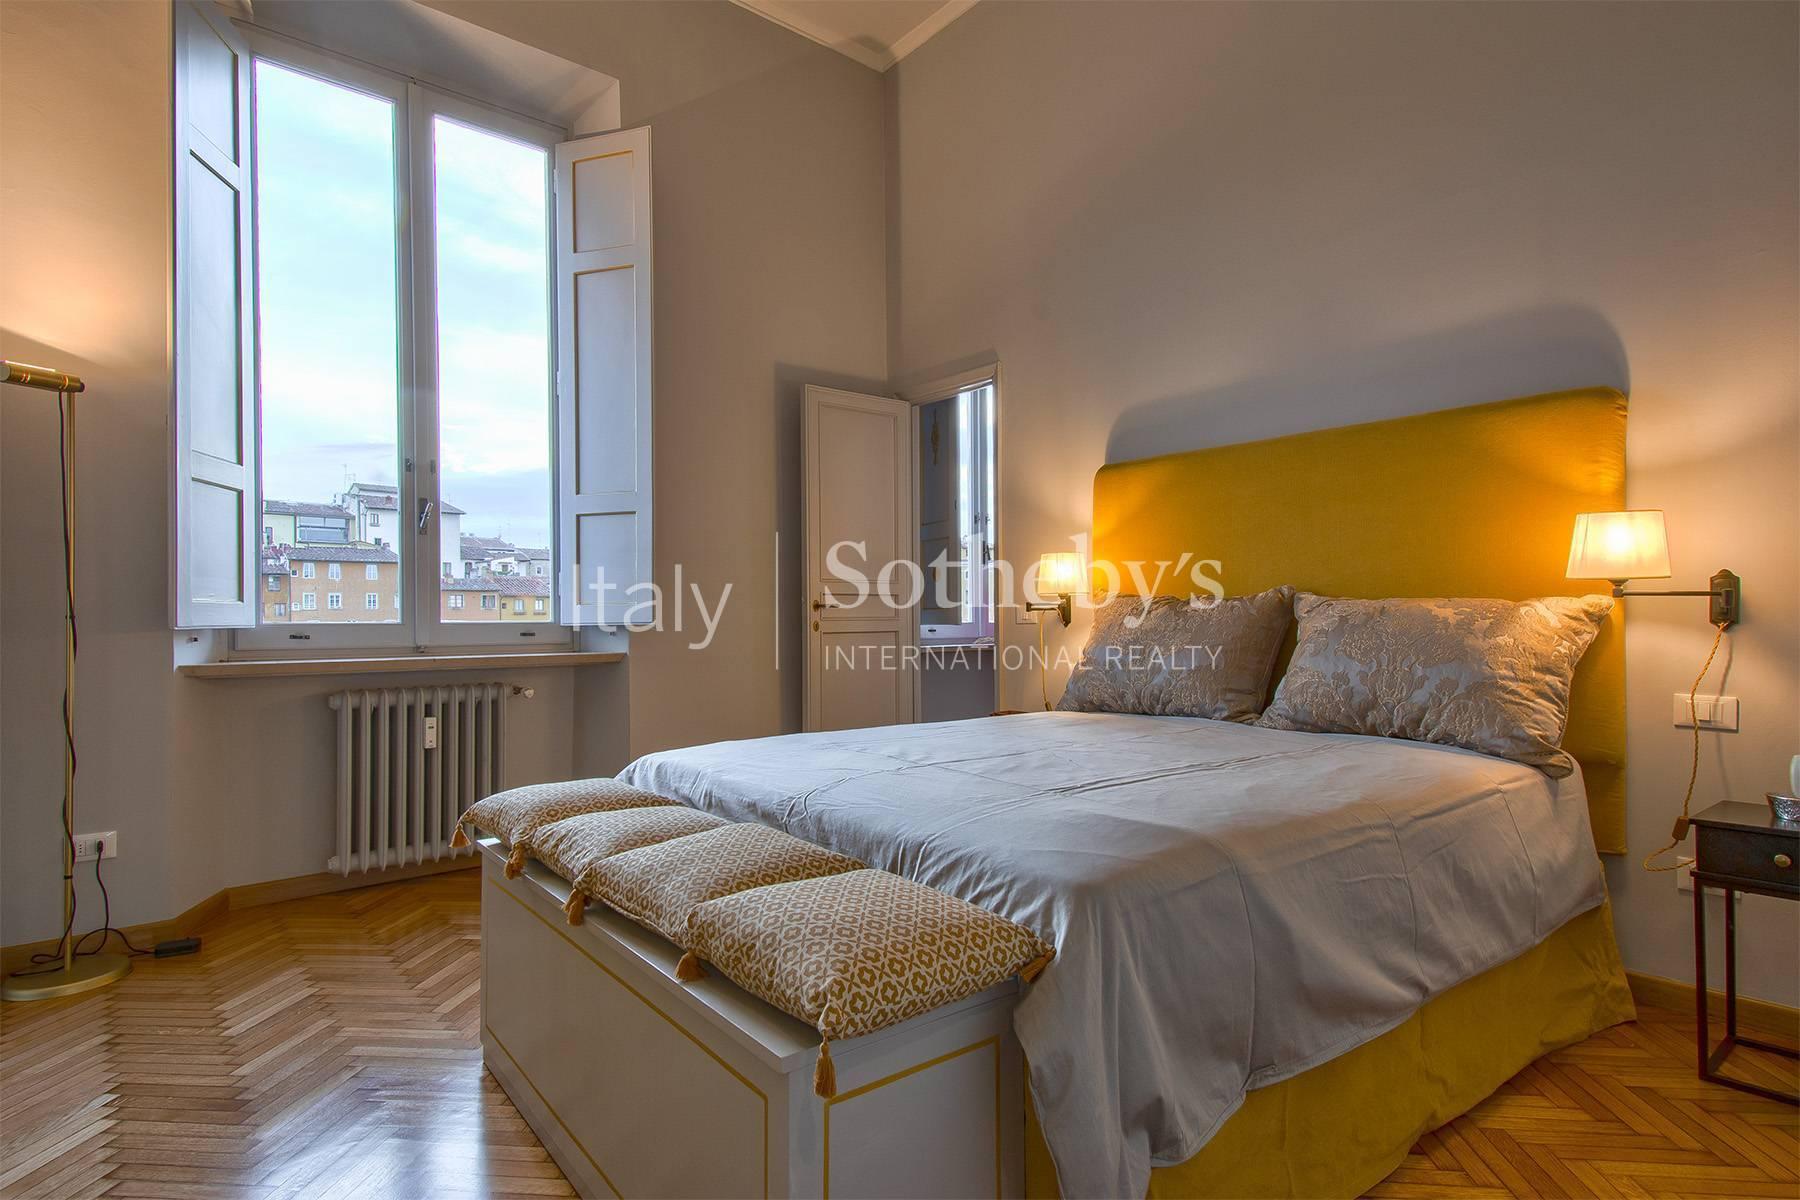 Appartamento moderno con vista su Ponte Vecchio - 12